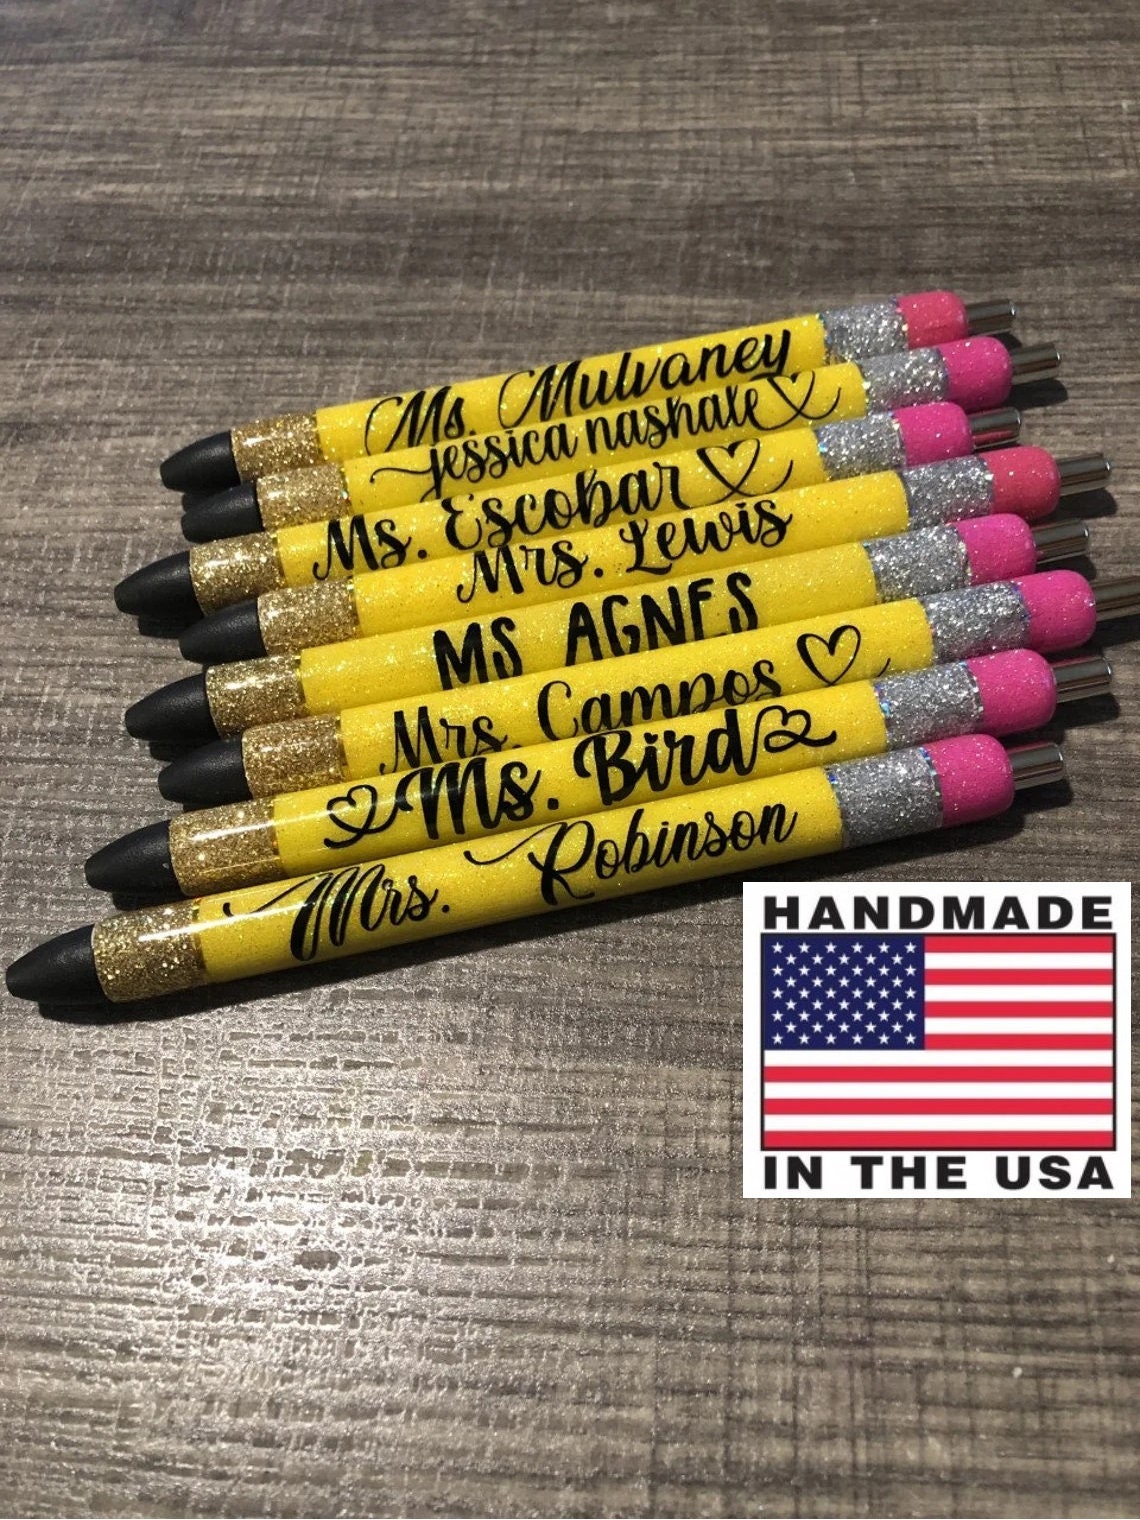 Mr. Pen- Glitter Gel Pens, Assorted Colors, 20 Pack, Glitter Pens